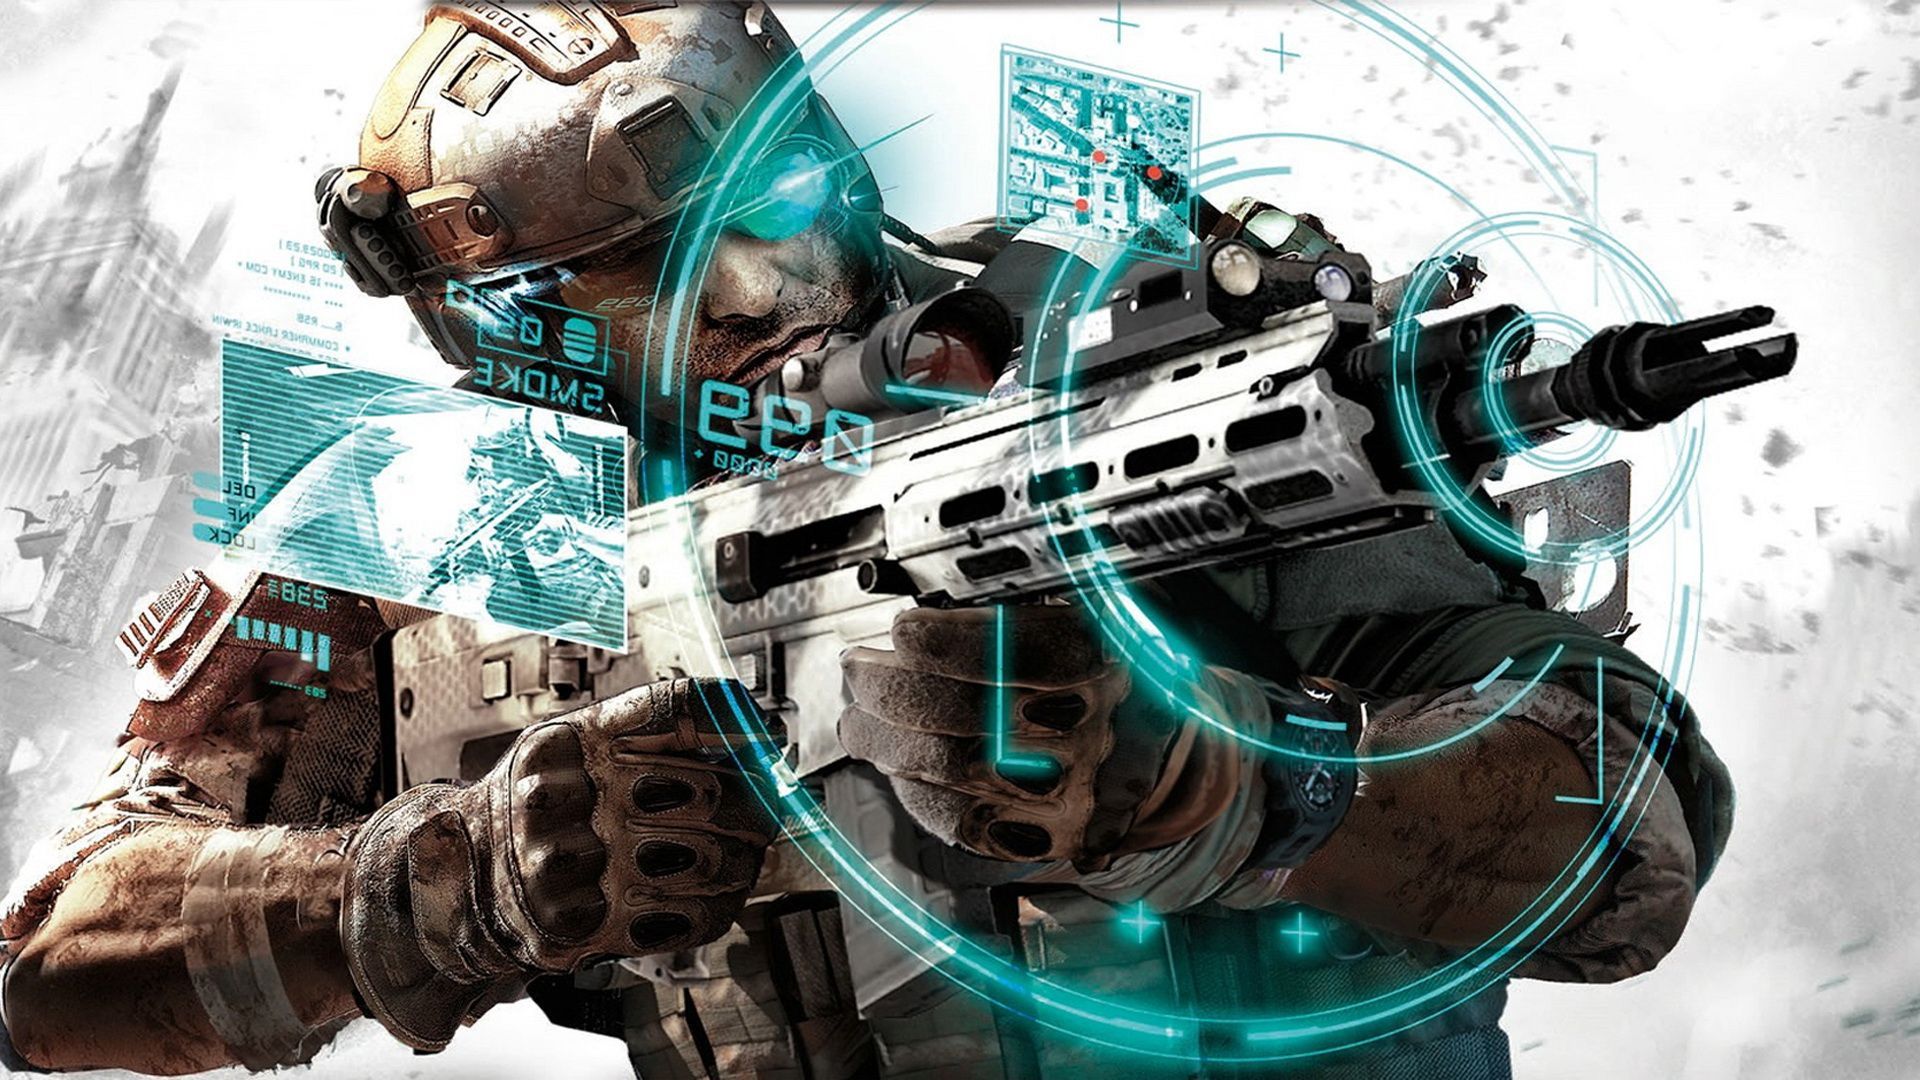 Ghost recon future soldier pc Game Wallpaper